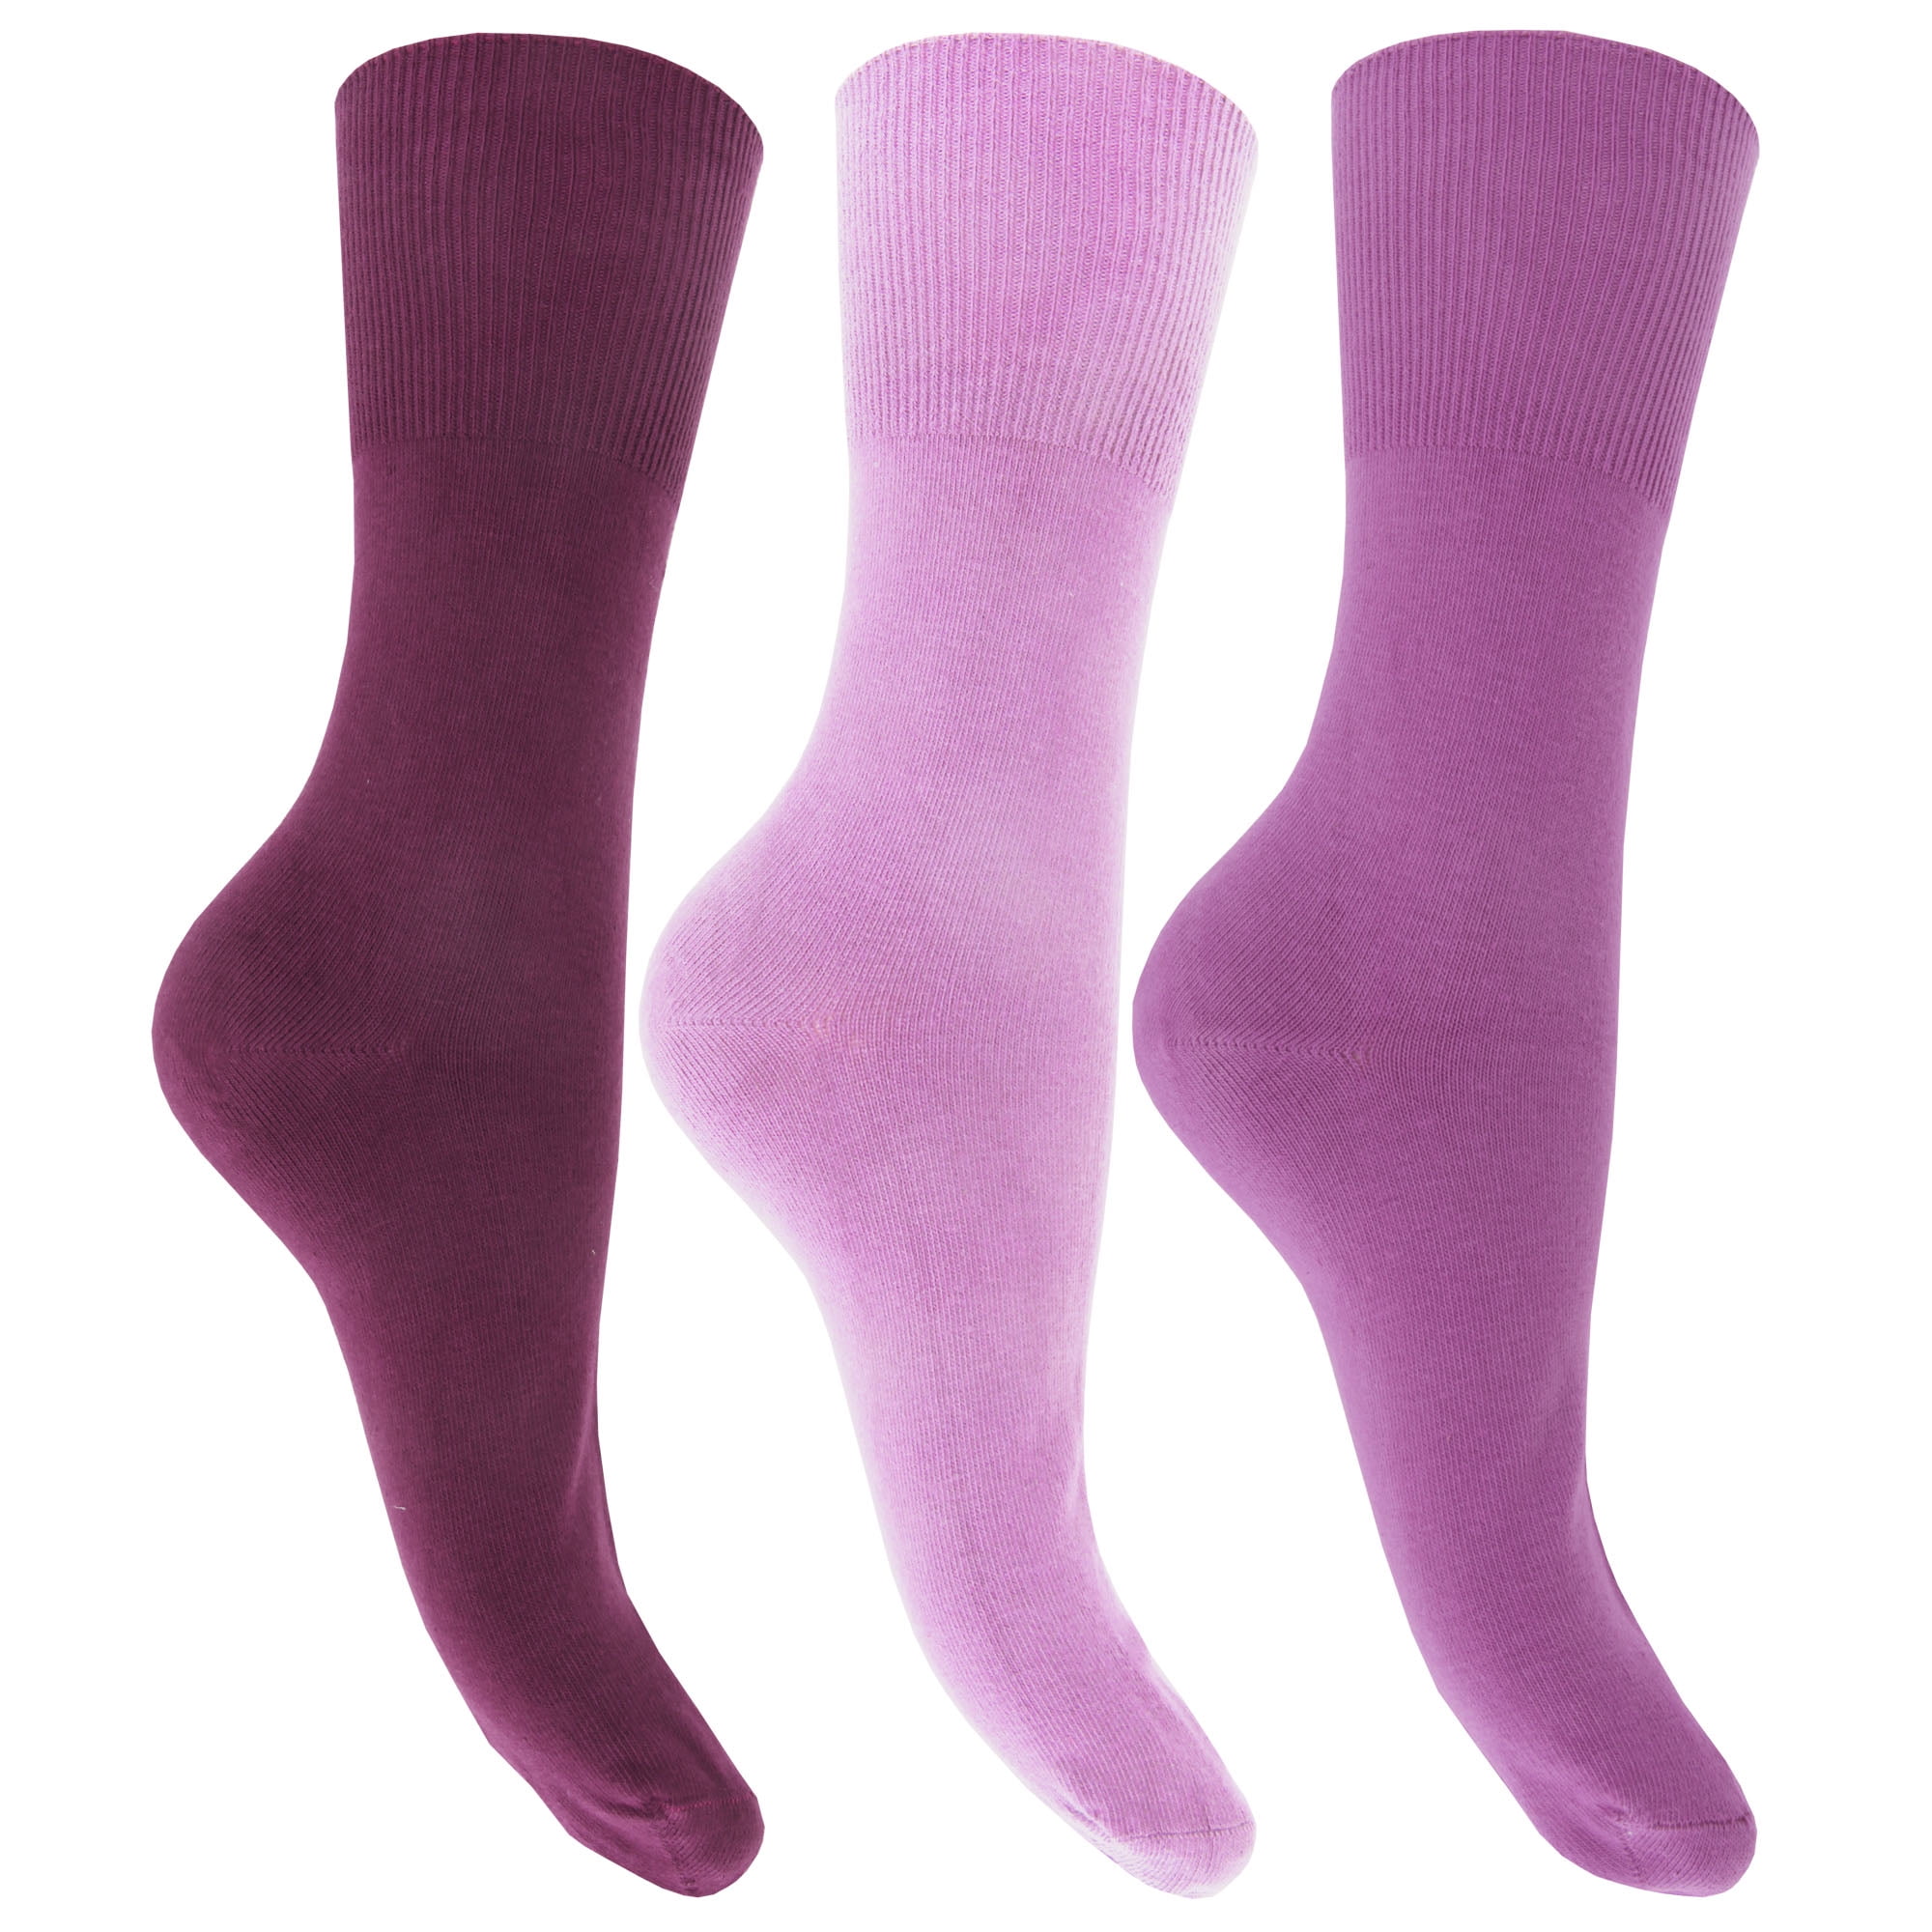 Mens black diabetic 99% cotton non elastic socks 3 pair pack size 6-11 